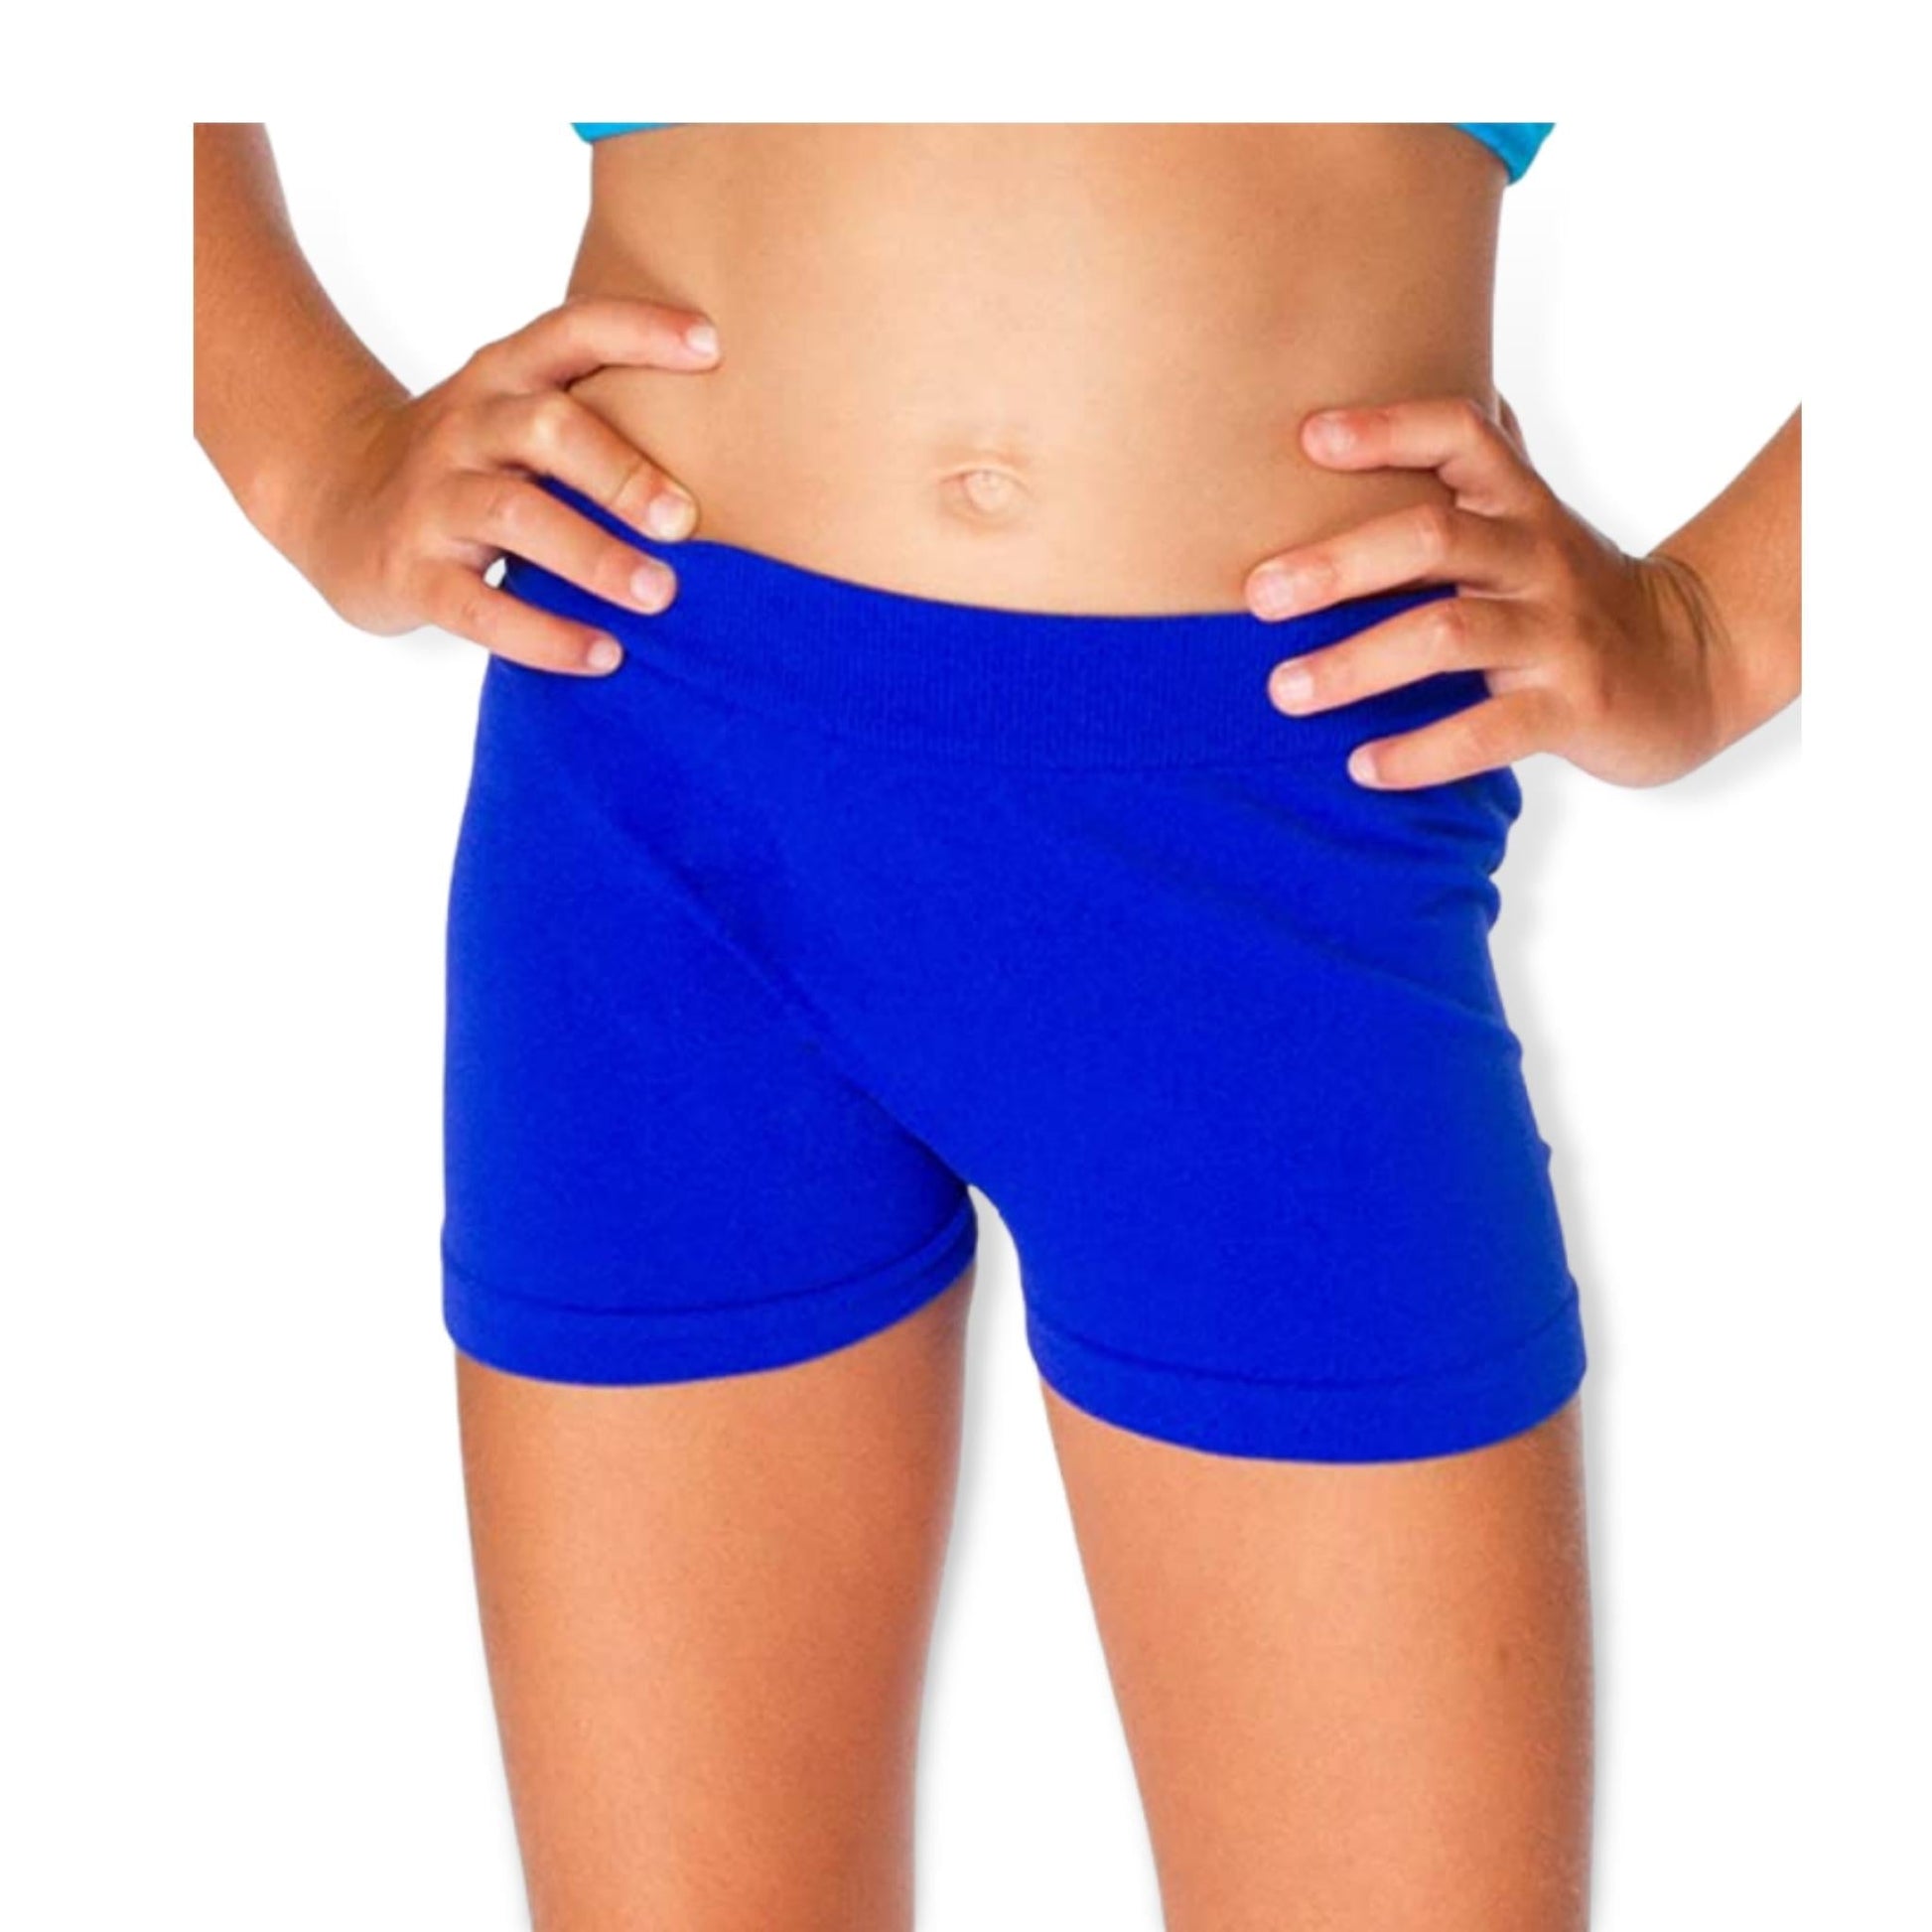 Malibu Sugar Cobalt Solid Boy Shorts (4-6x) - a Spirit Animal - shorts active Oct 2022 bottoms Charcoal